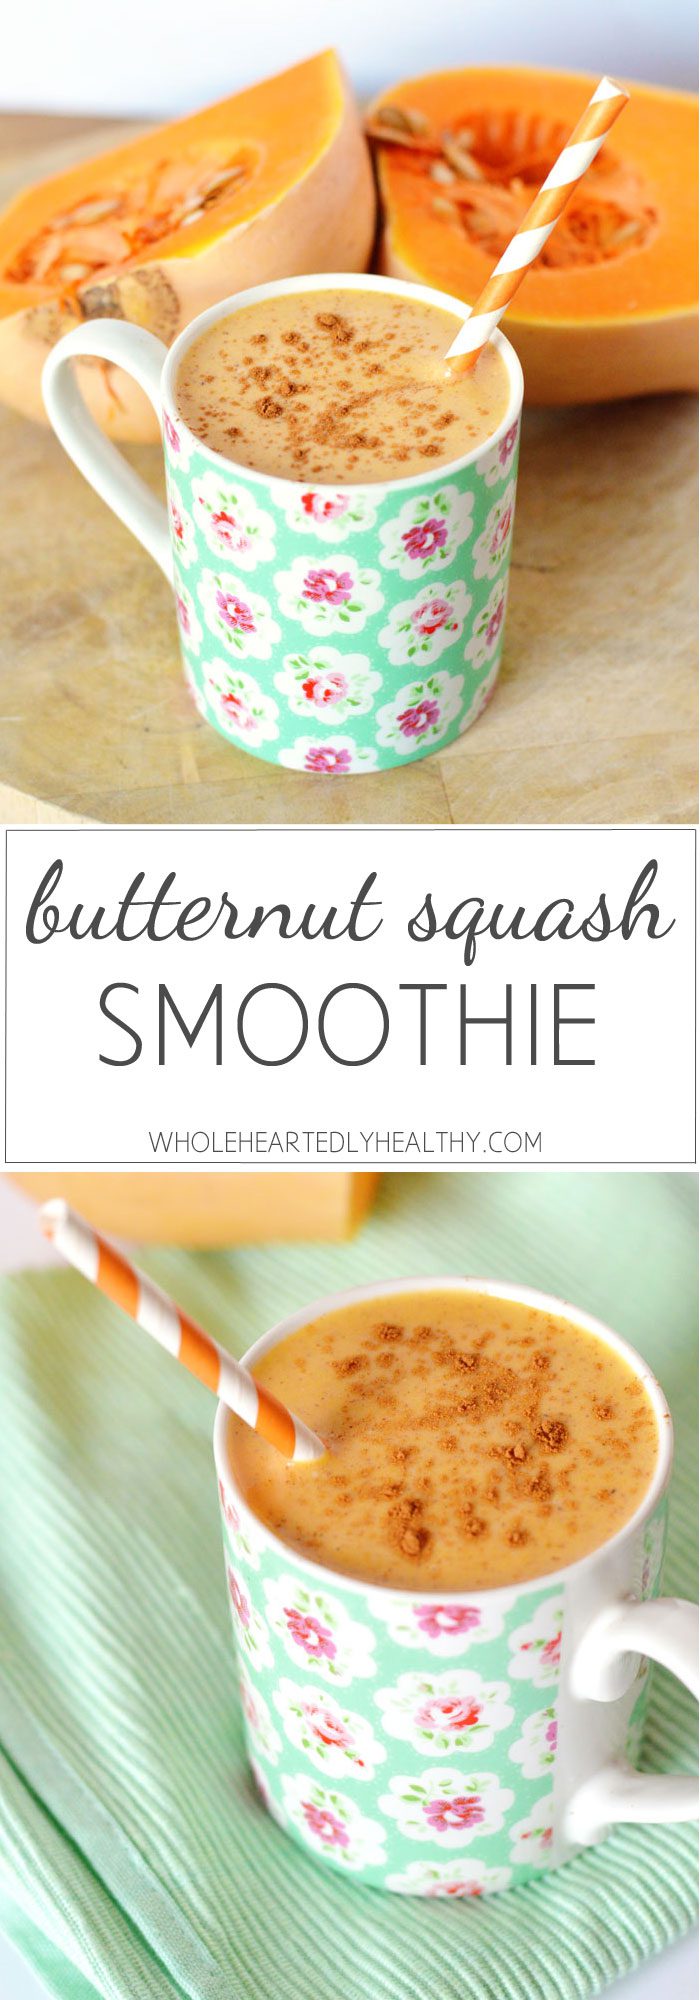 Butternut squash smoothie recipe